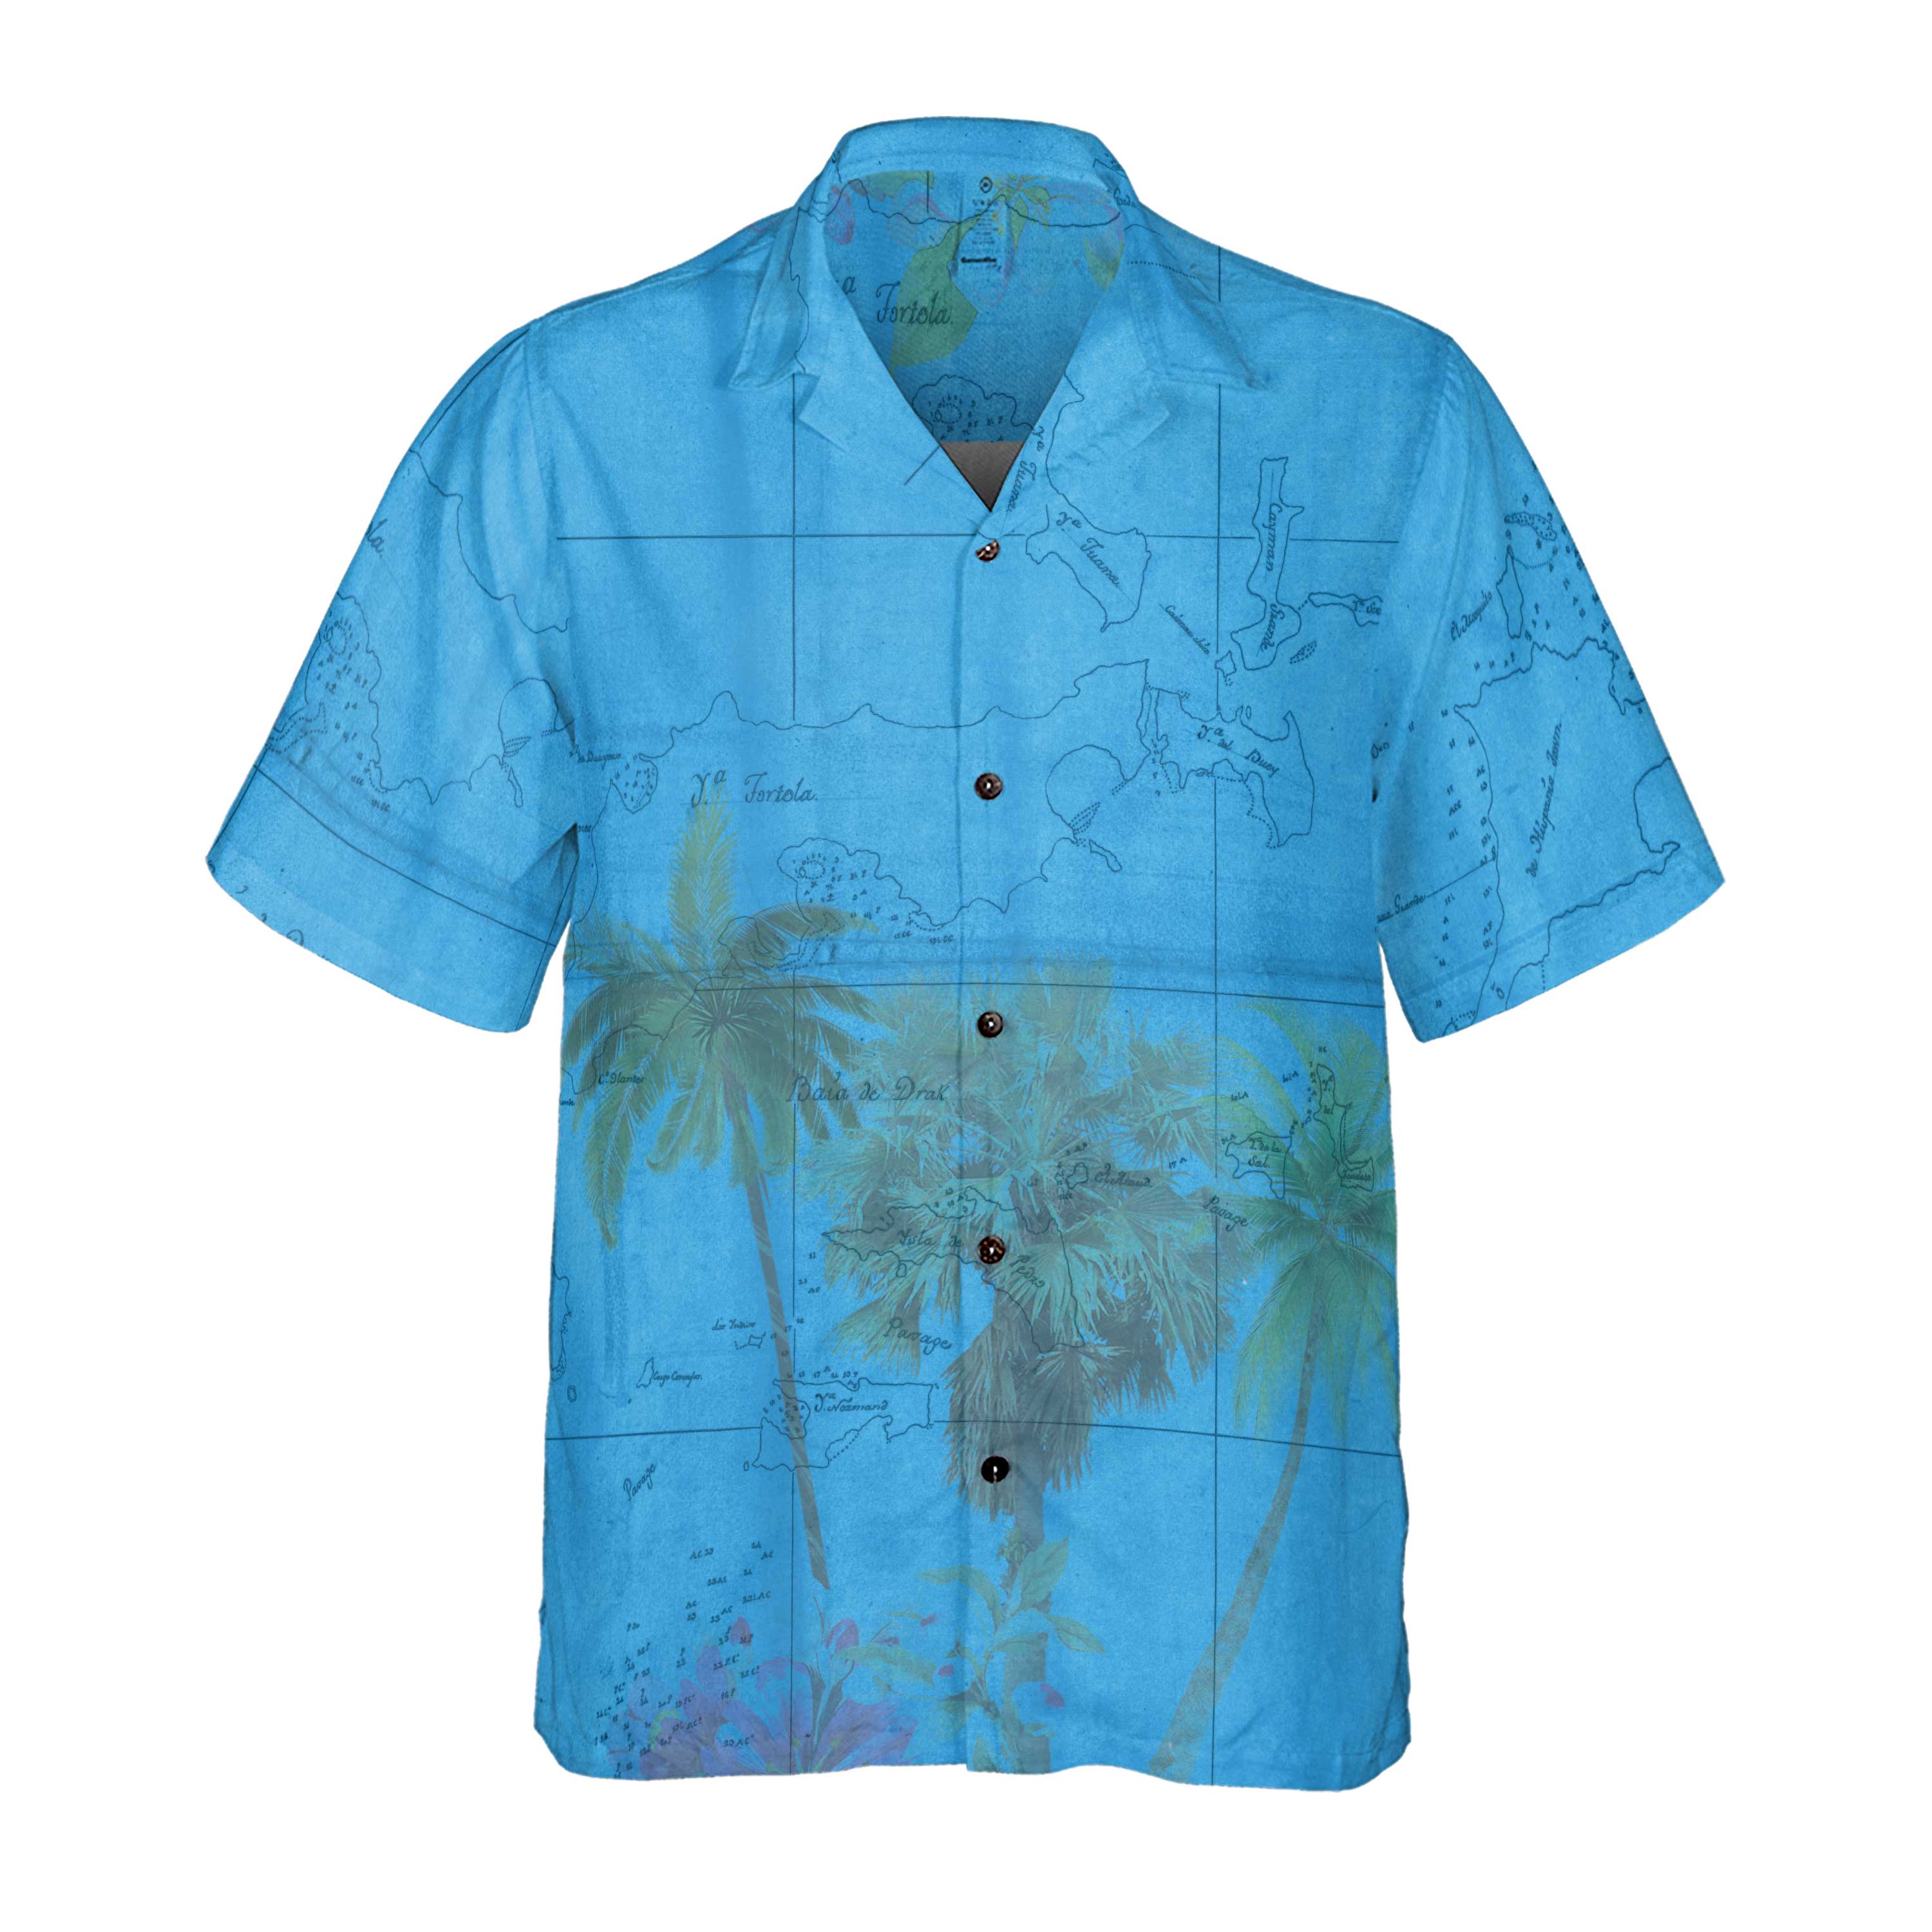 The British Virgin Islands Tropical Blue Coconut Button Camp Shirt